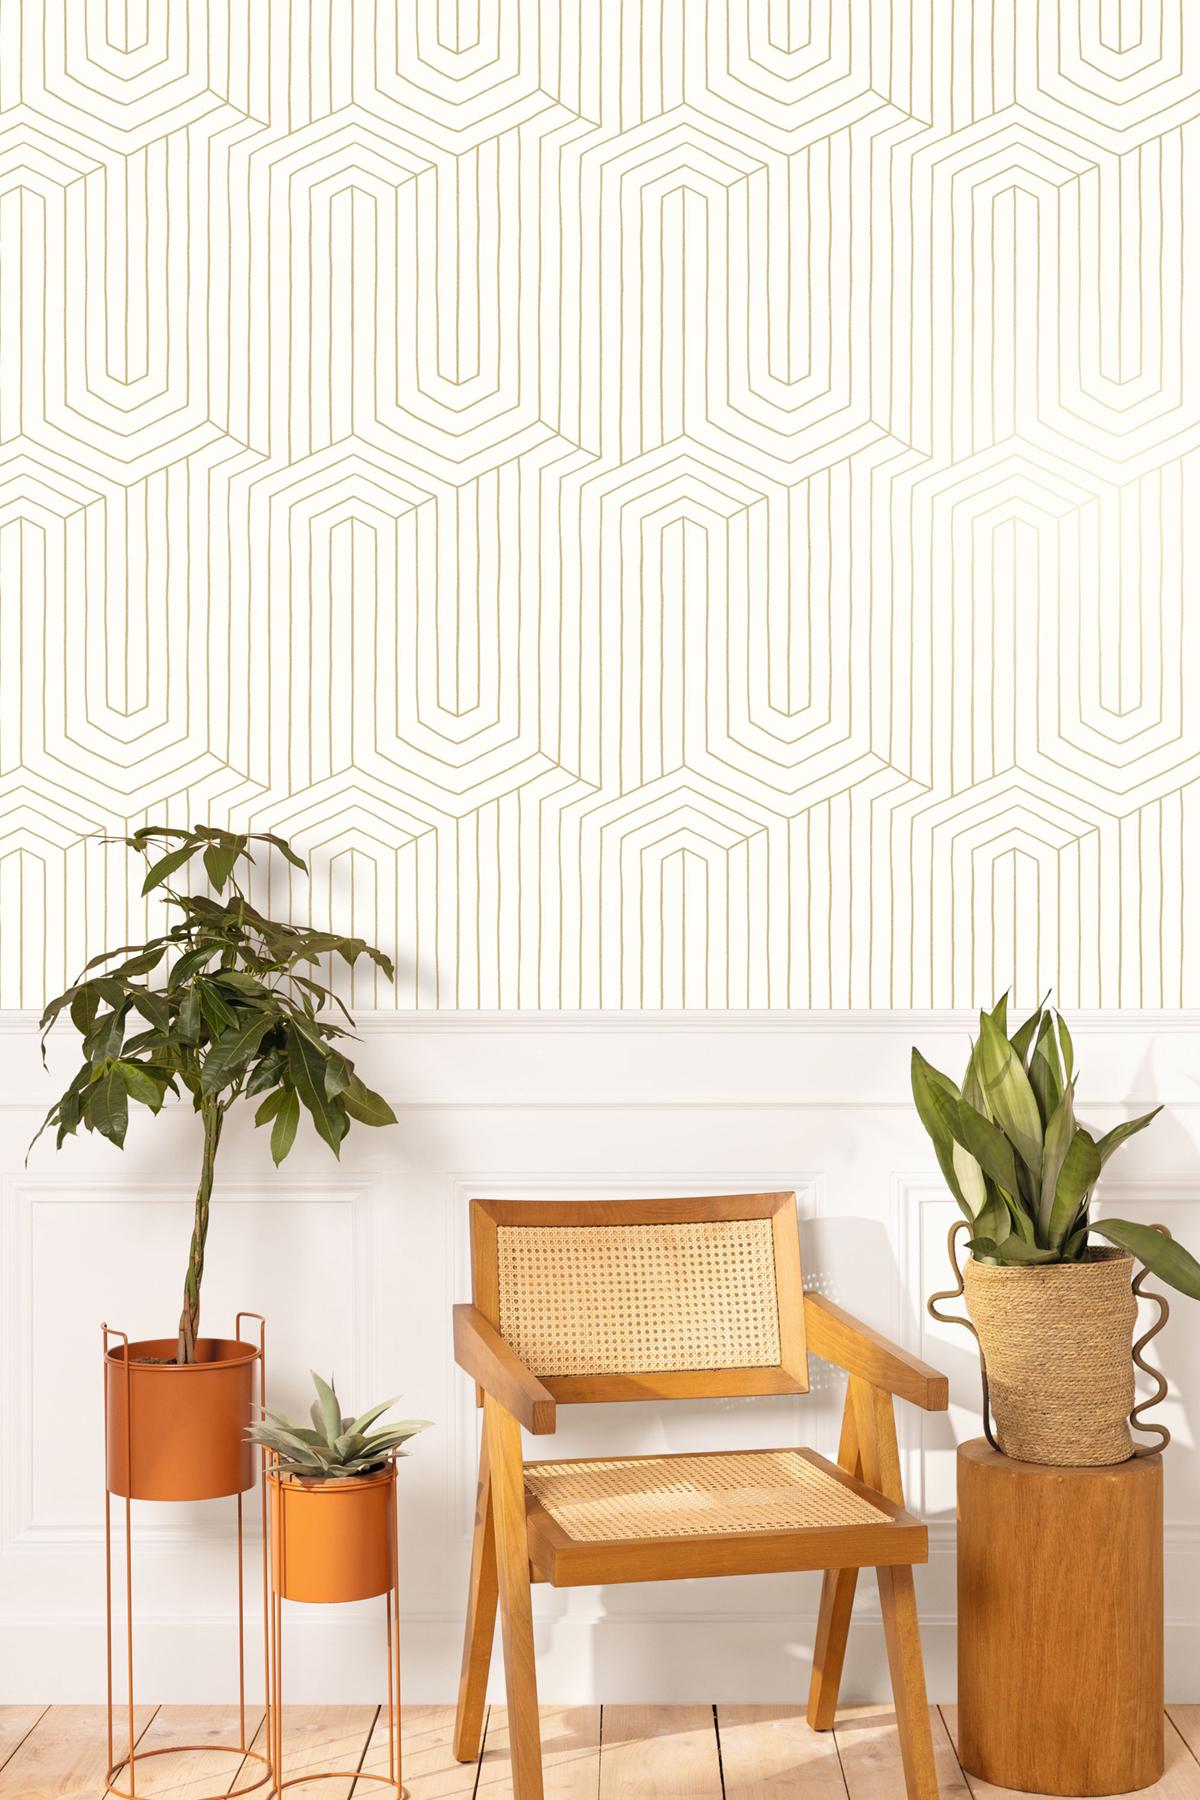 Xxl Gold White Infinite Geometric Line Wallpaper 